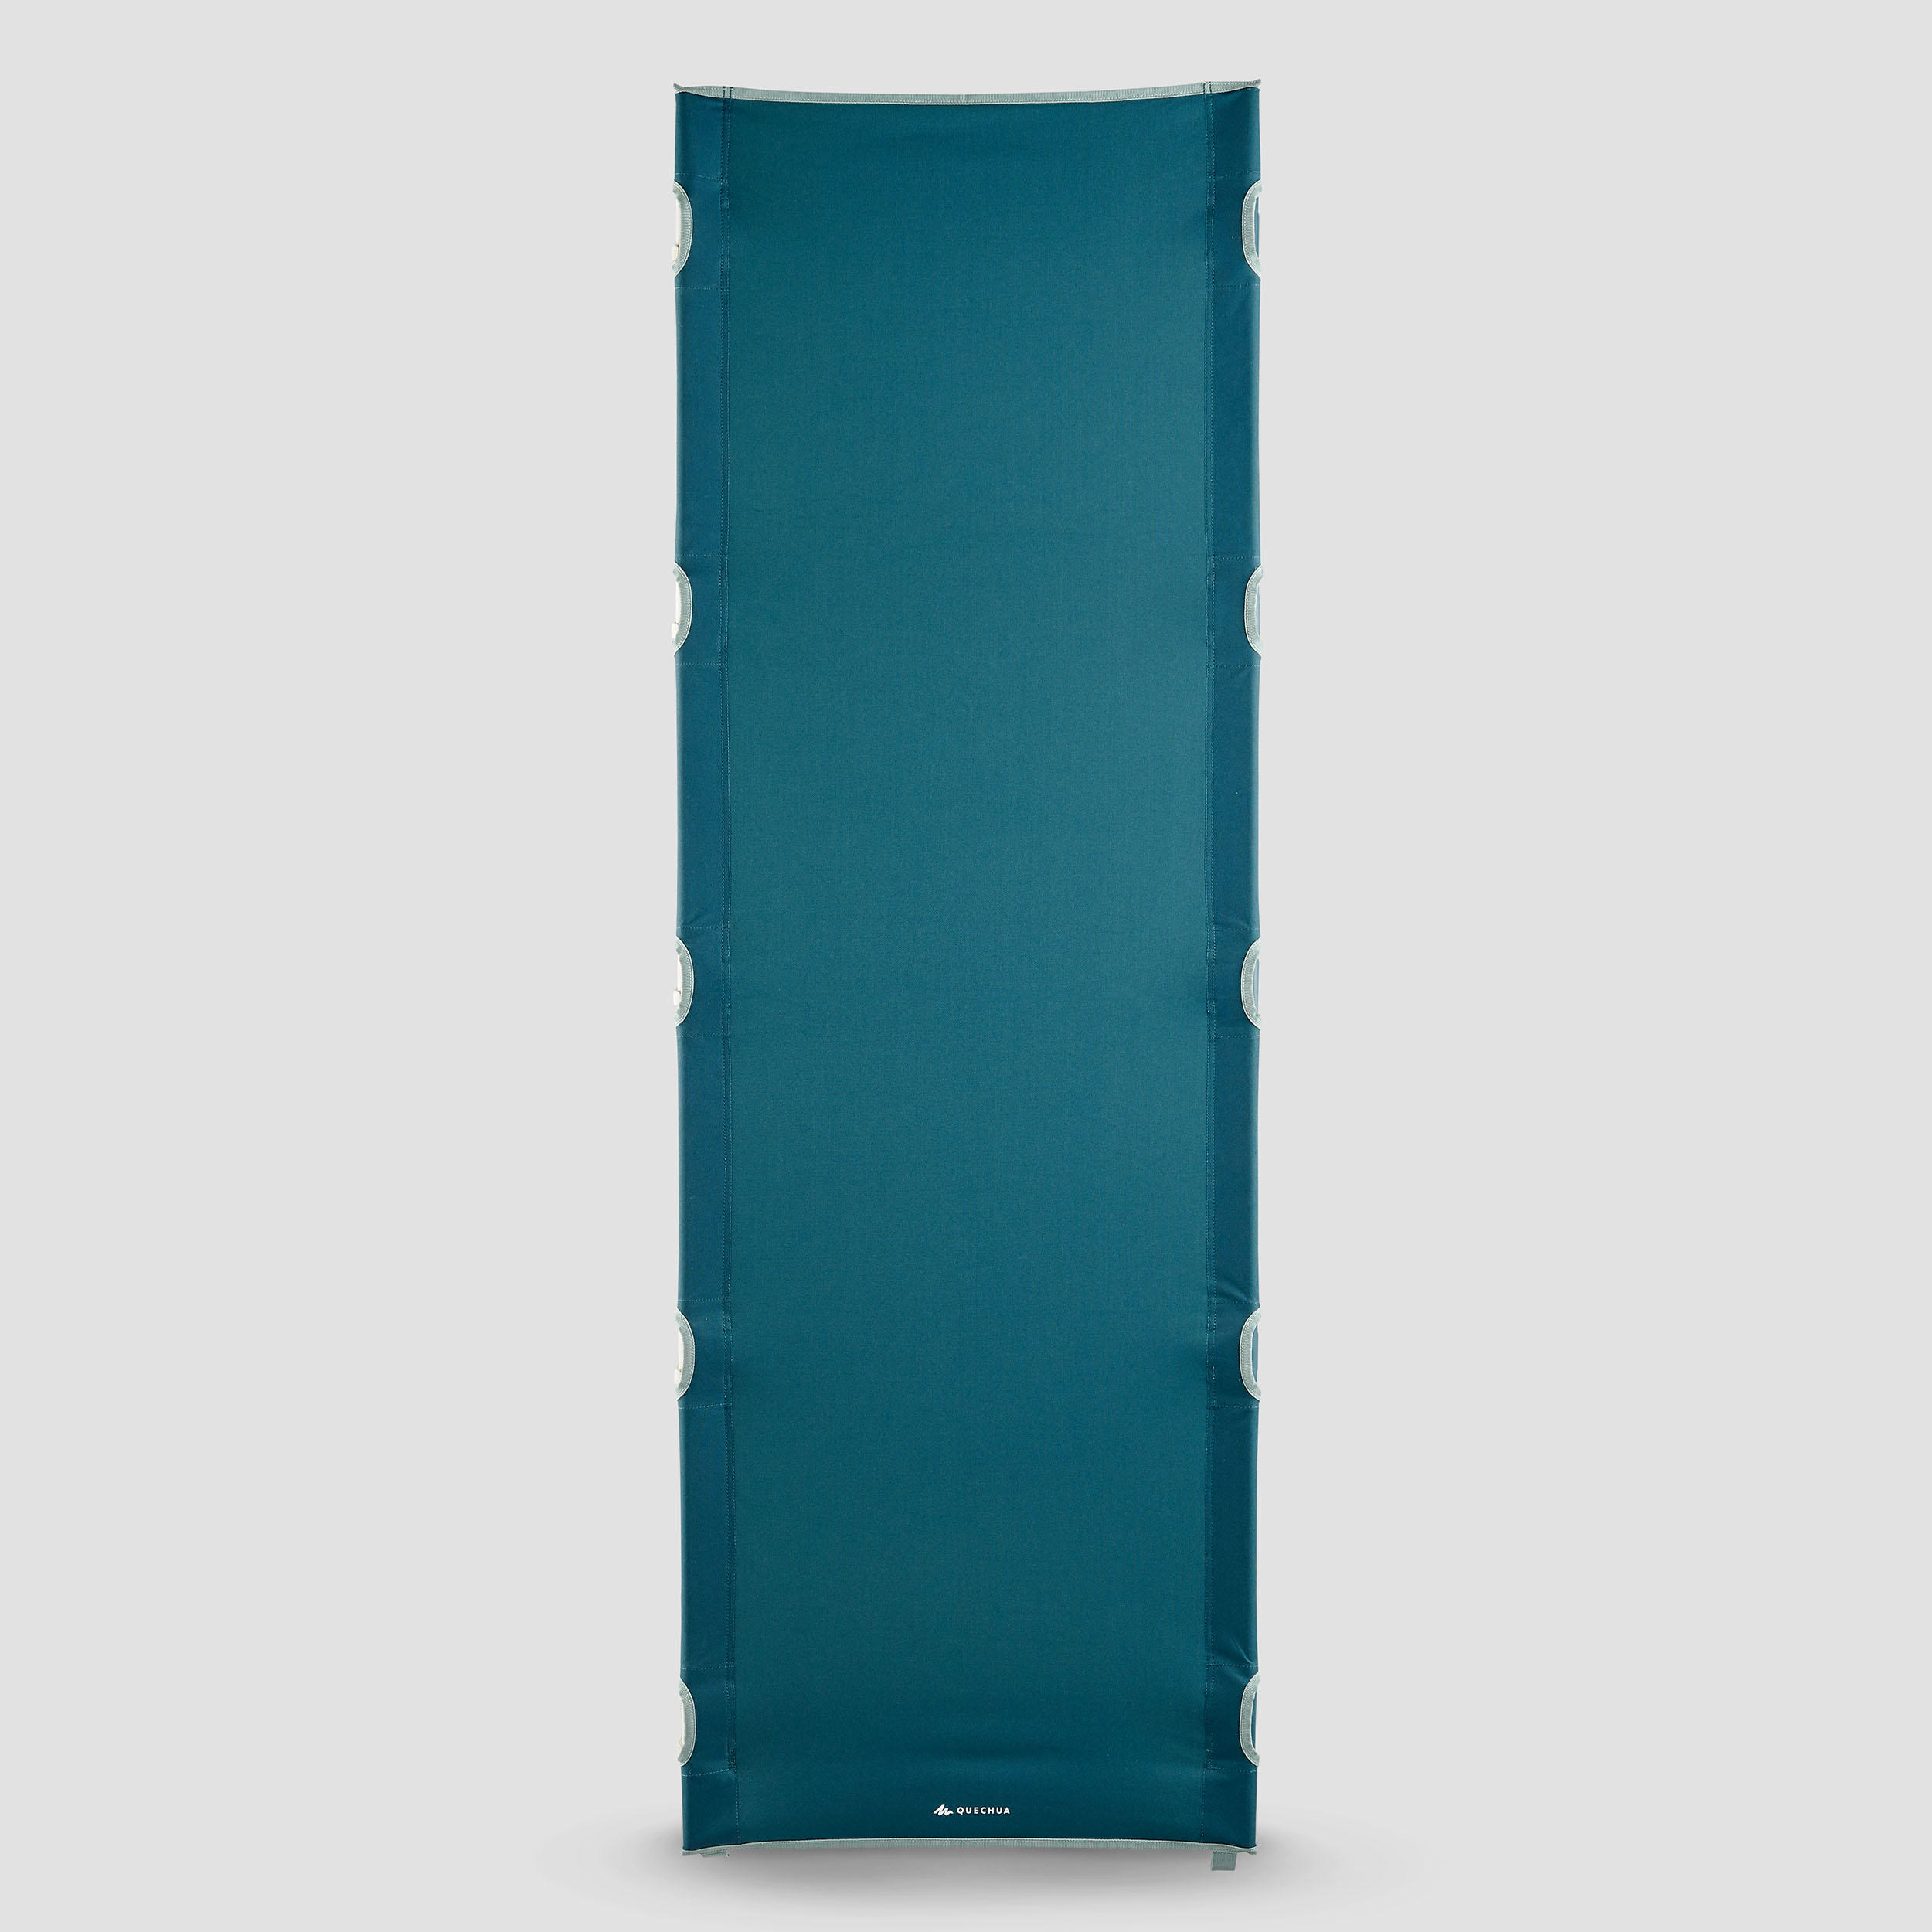 1 Person Folding Camping Cot 185 x 60 cm - Basic New Green - QUECHUA